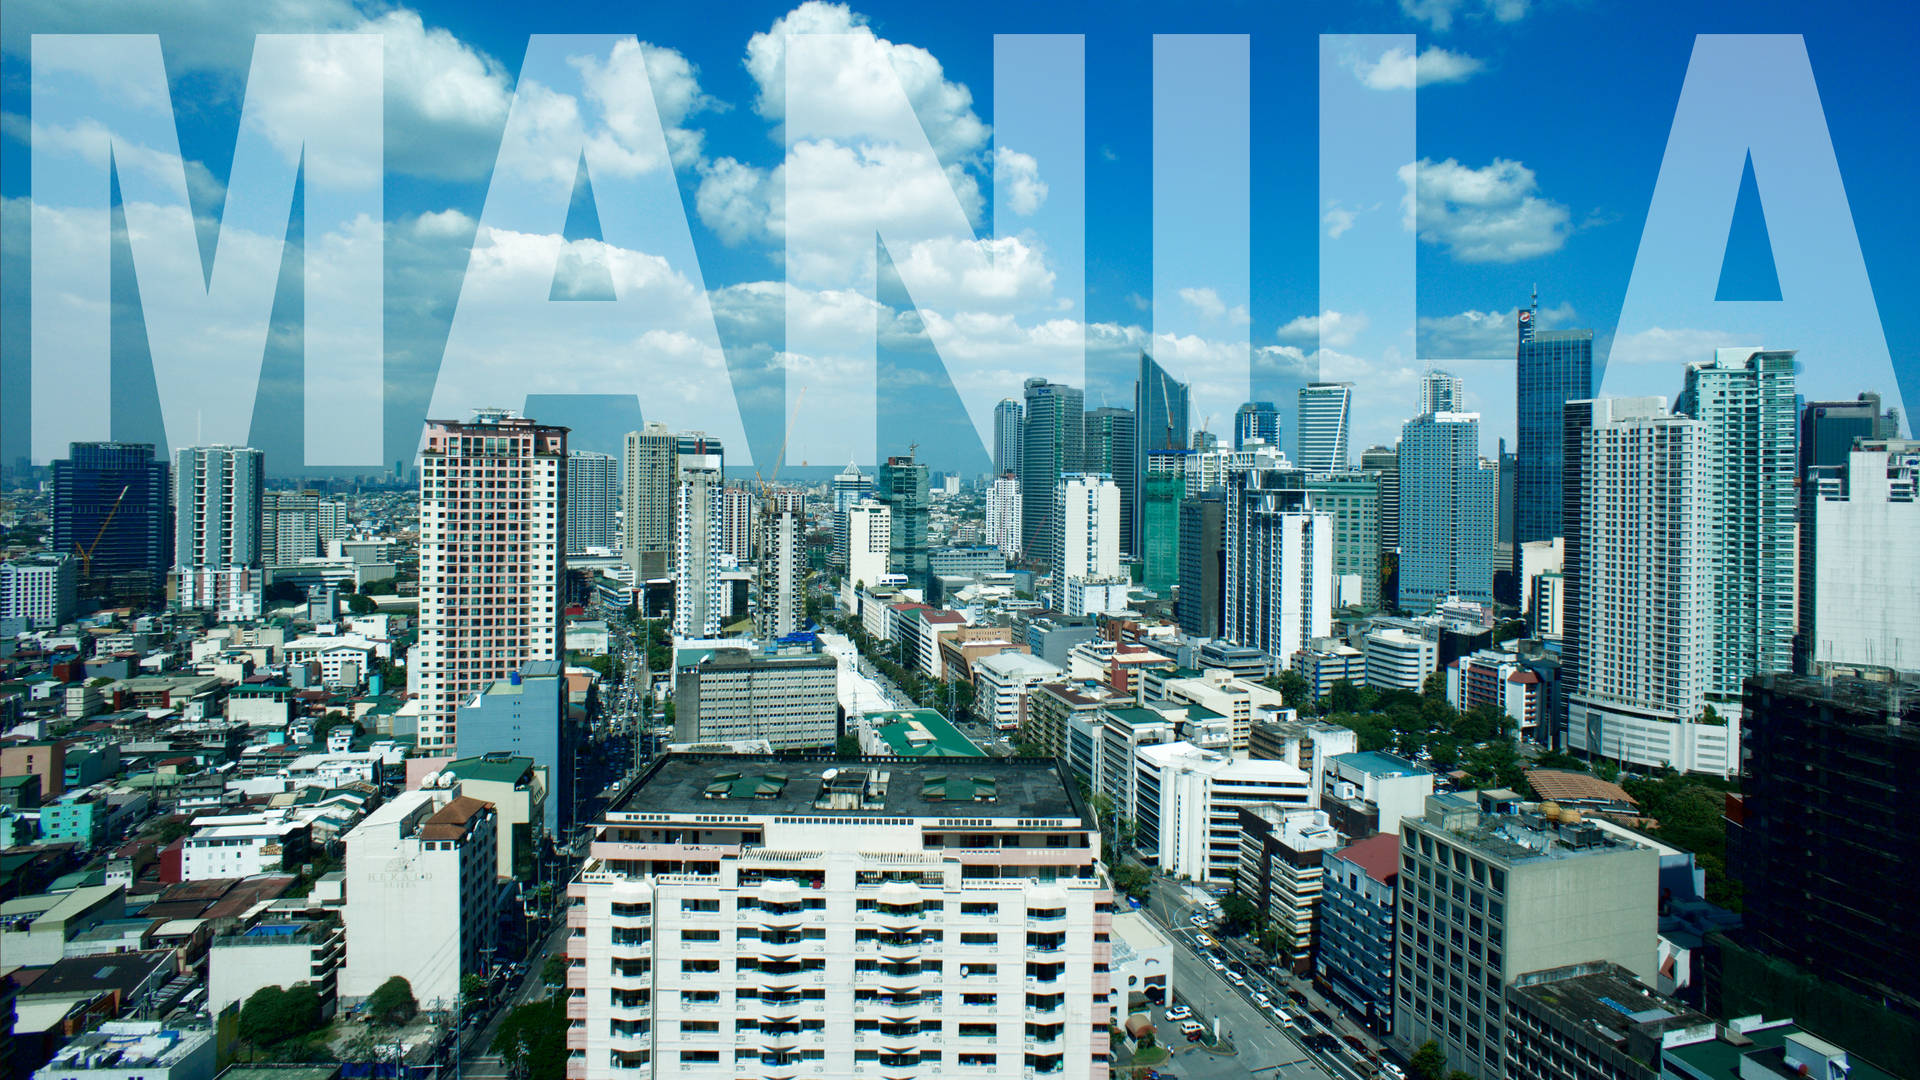 Manila - The Vibrant City Of Colours